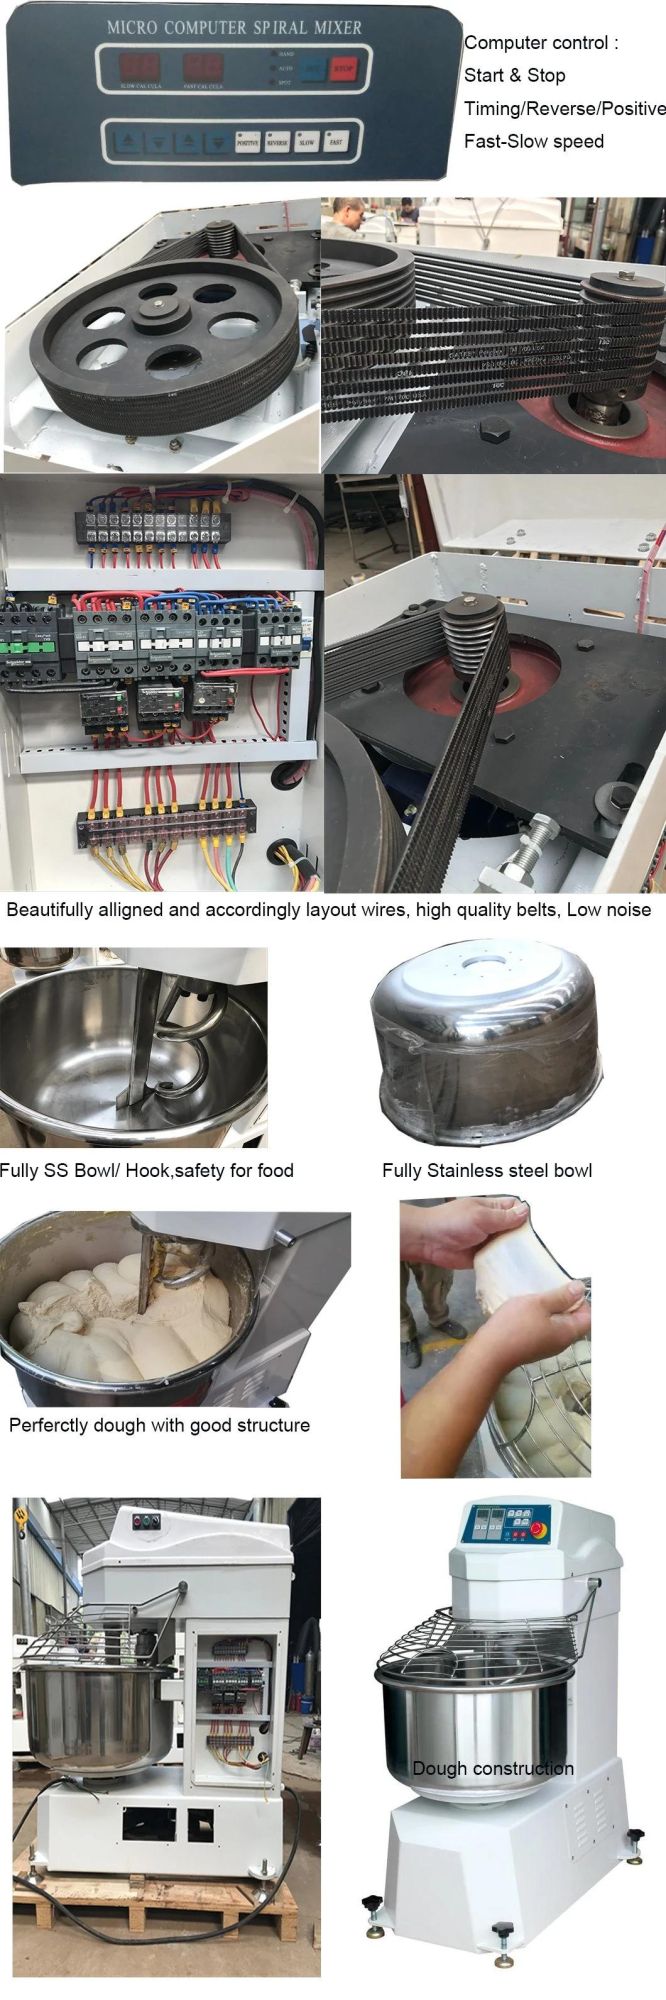 Bkj50 Baking Equipment Factory Price for Sale Industrial Commercial Spiral Dough Mixer Flour Food Mixer Machine